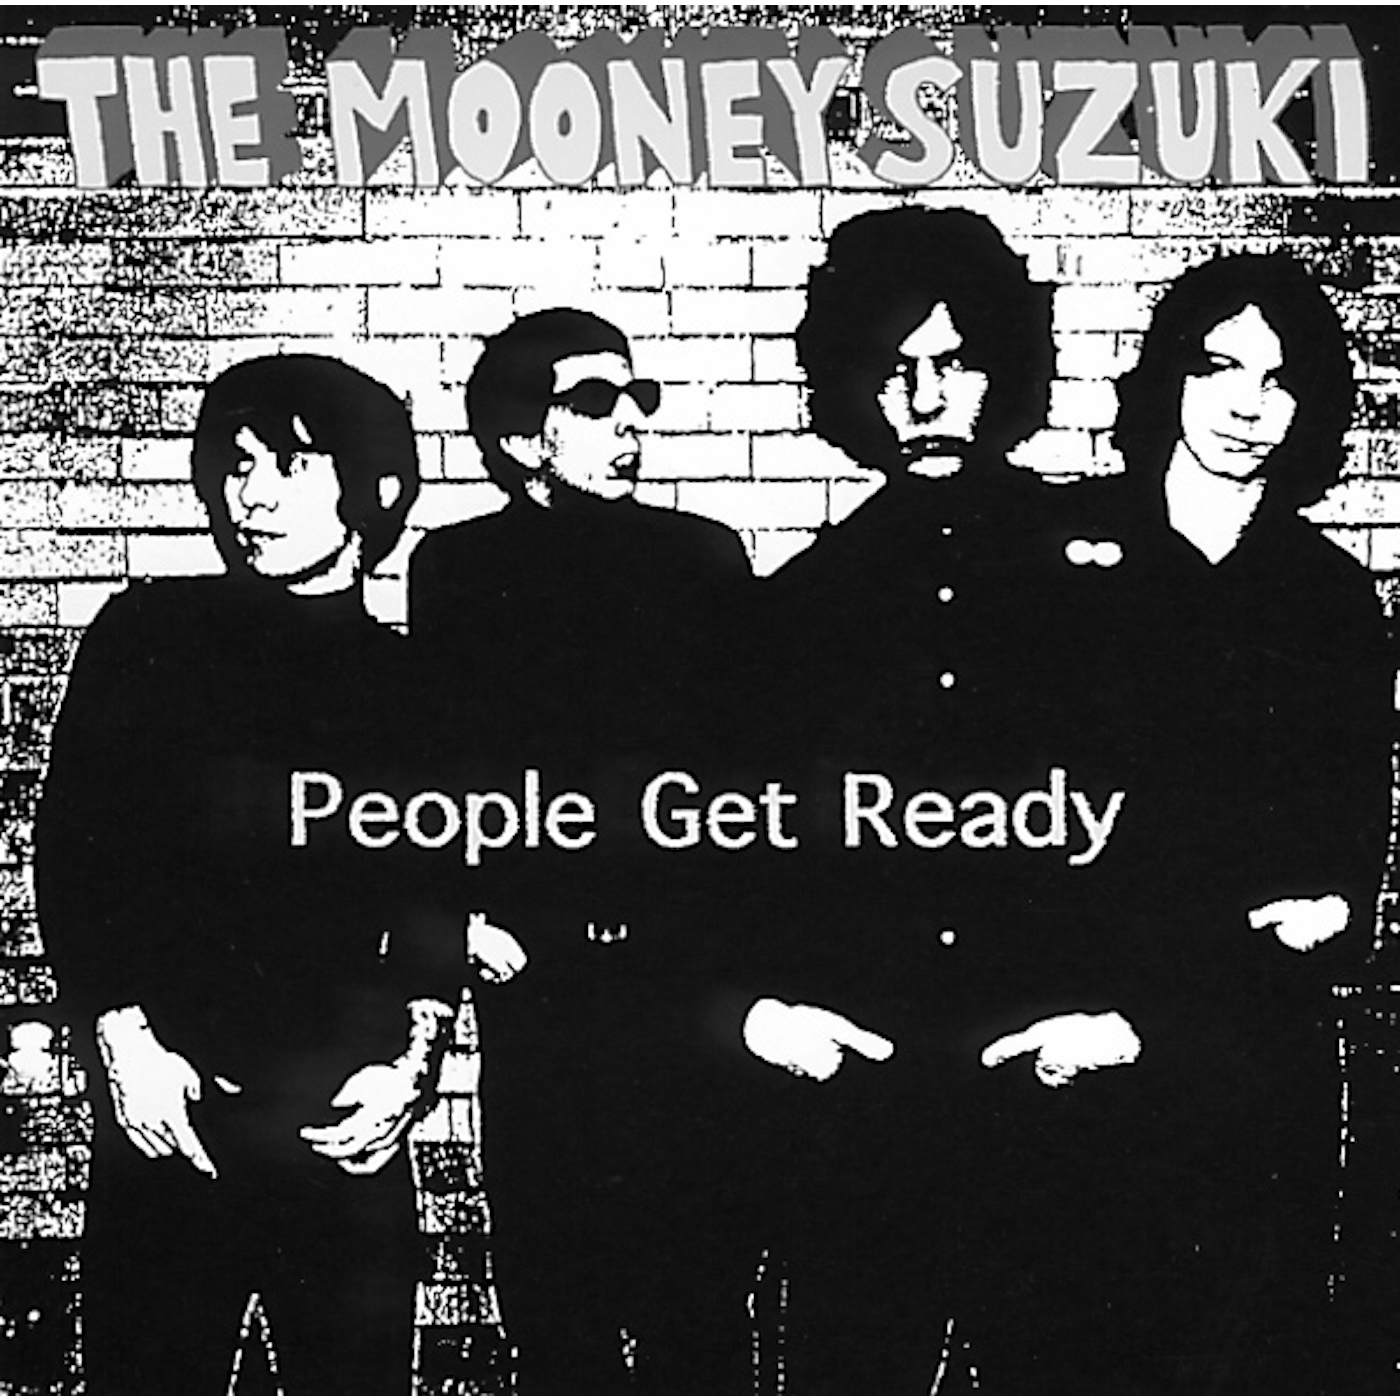 The Mooney Suzuki People Get Ready Vinyl Record